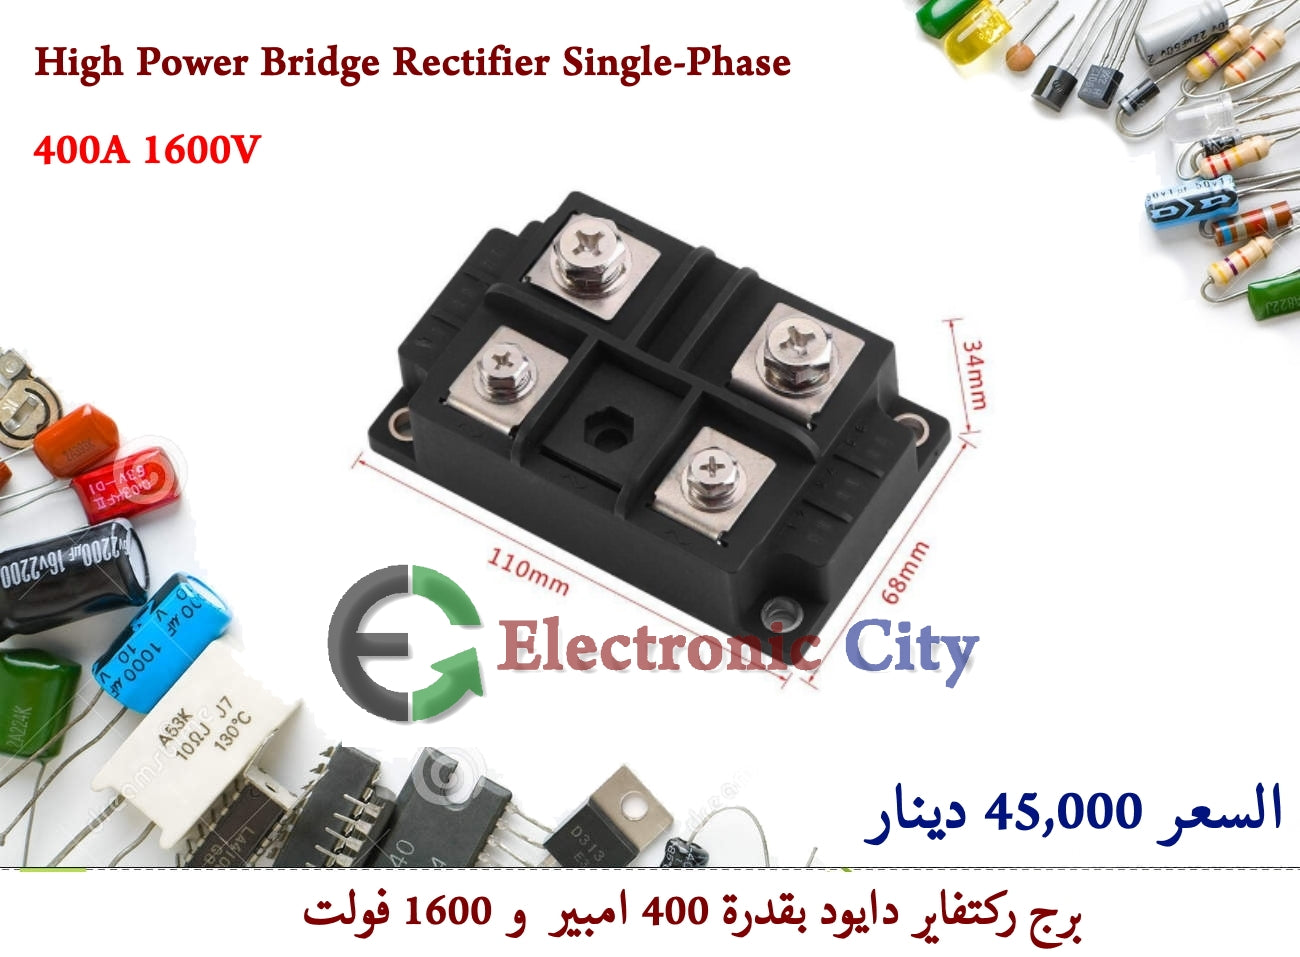 High Power Bridge Rectifier 400A 1600V Single-Phase